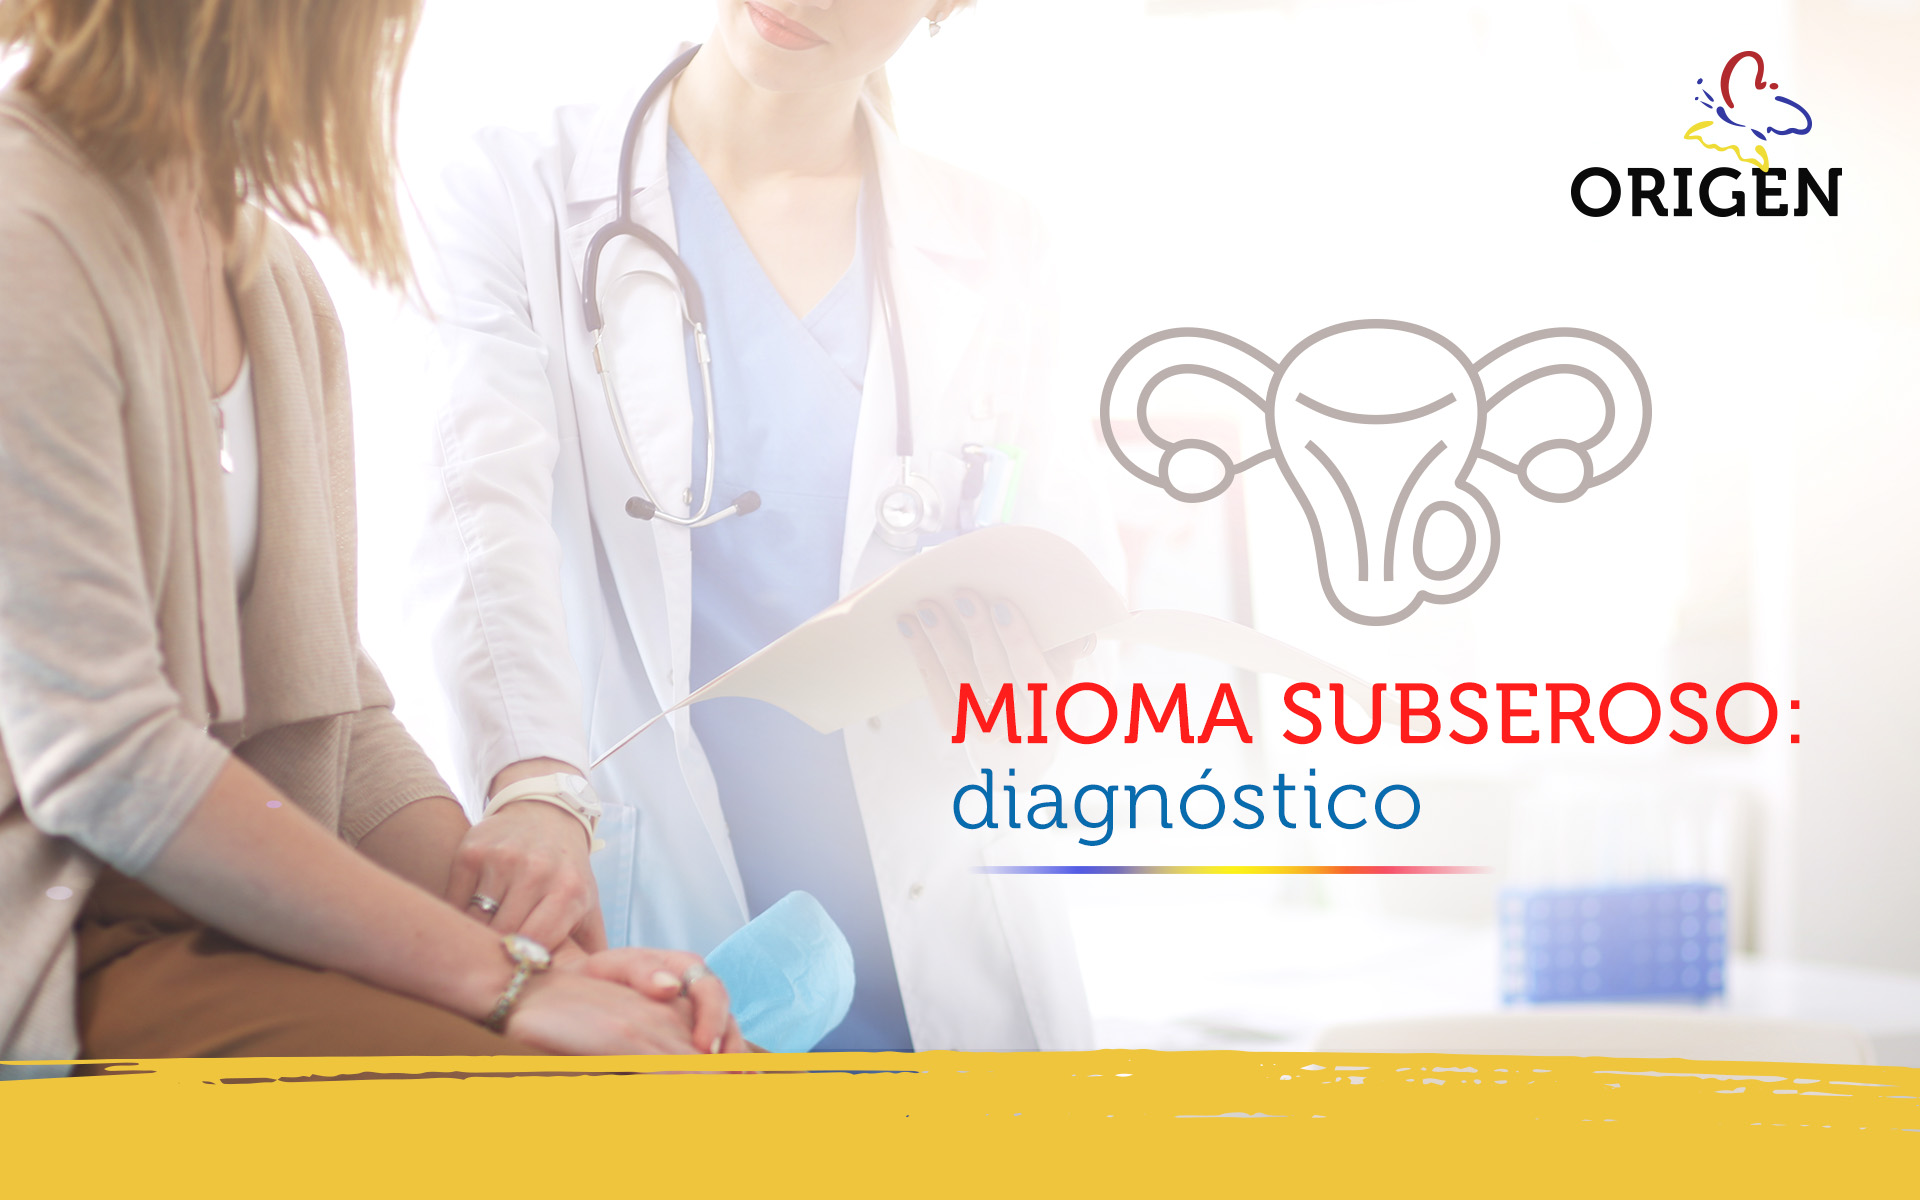 Mioma subseroso: diagnóstico